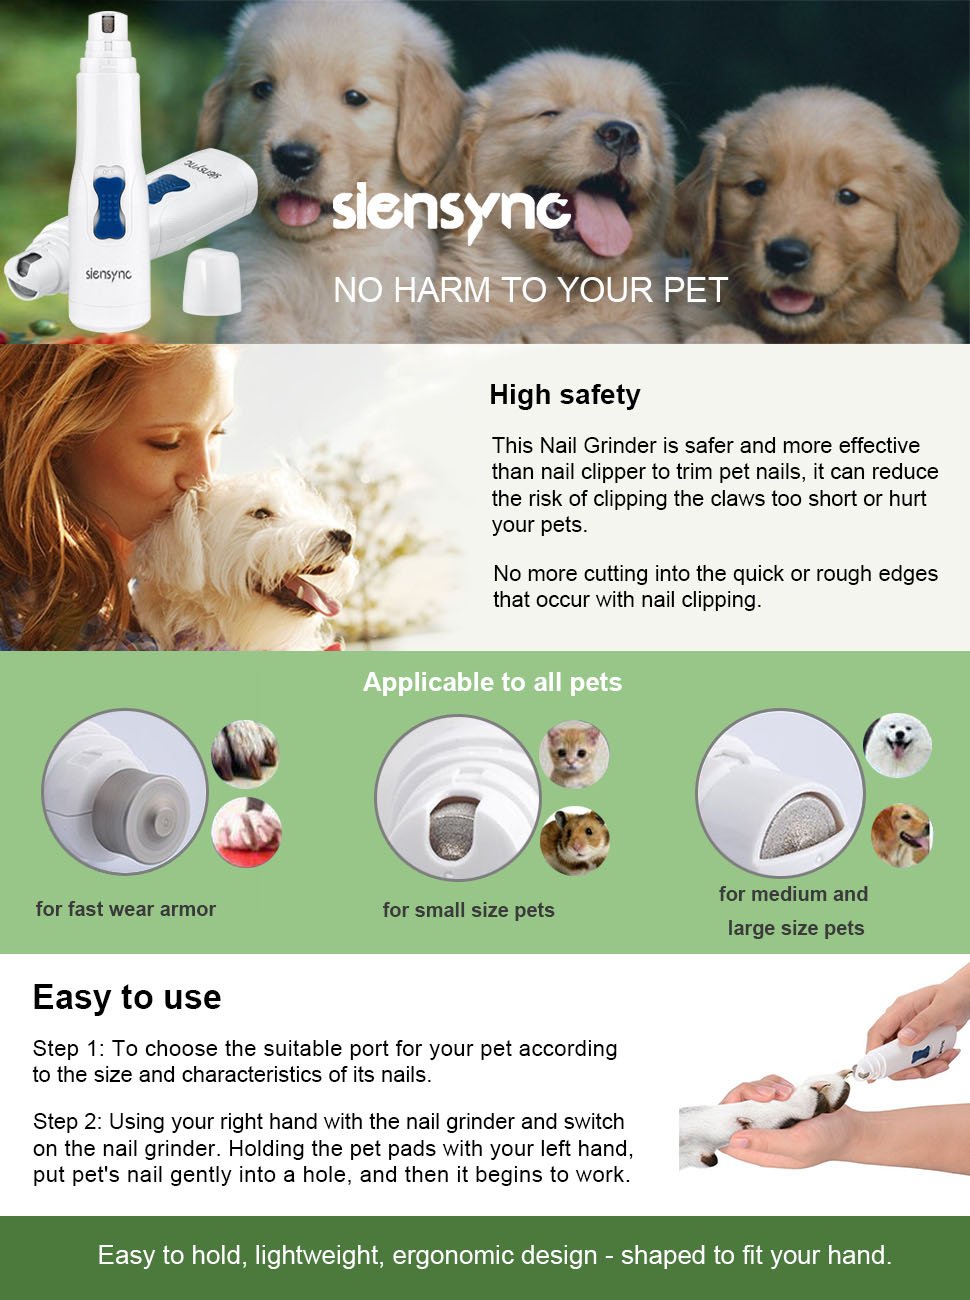 Amazon.com : Siensync Electric Pet Nail Grinder - Gentle ...